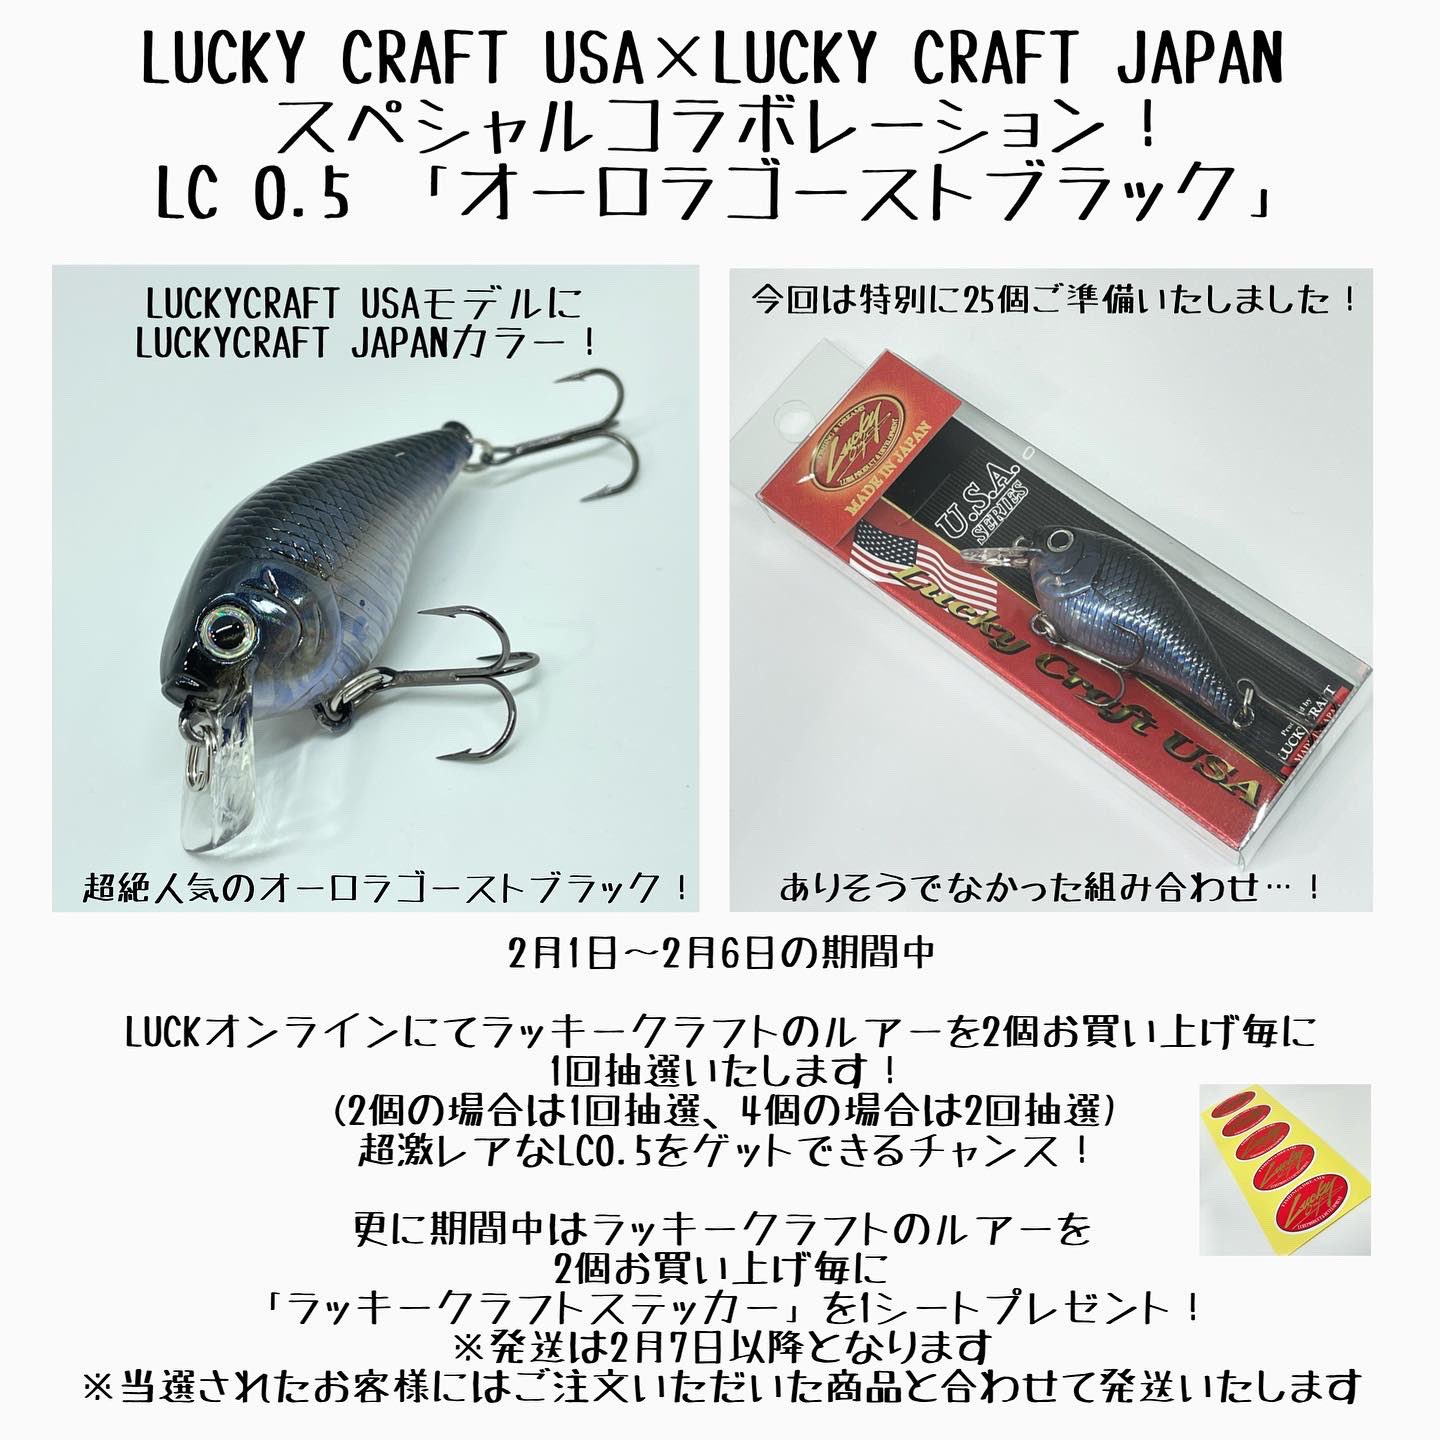 LuckyCraftJapan / ラッキークラフト公式 (@LuckyCraftJapan) / Twitter